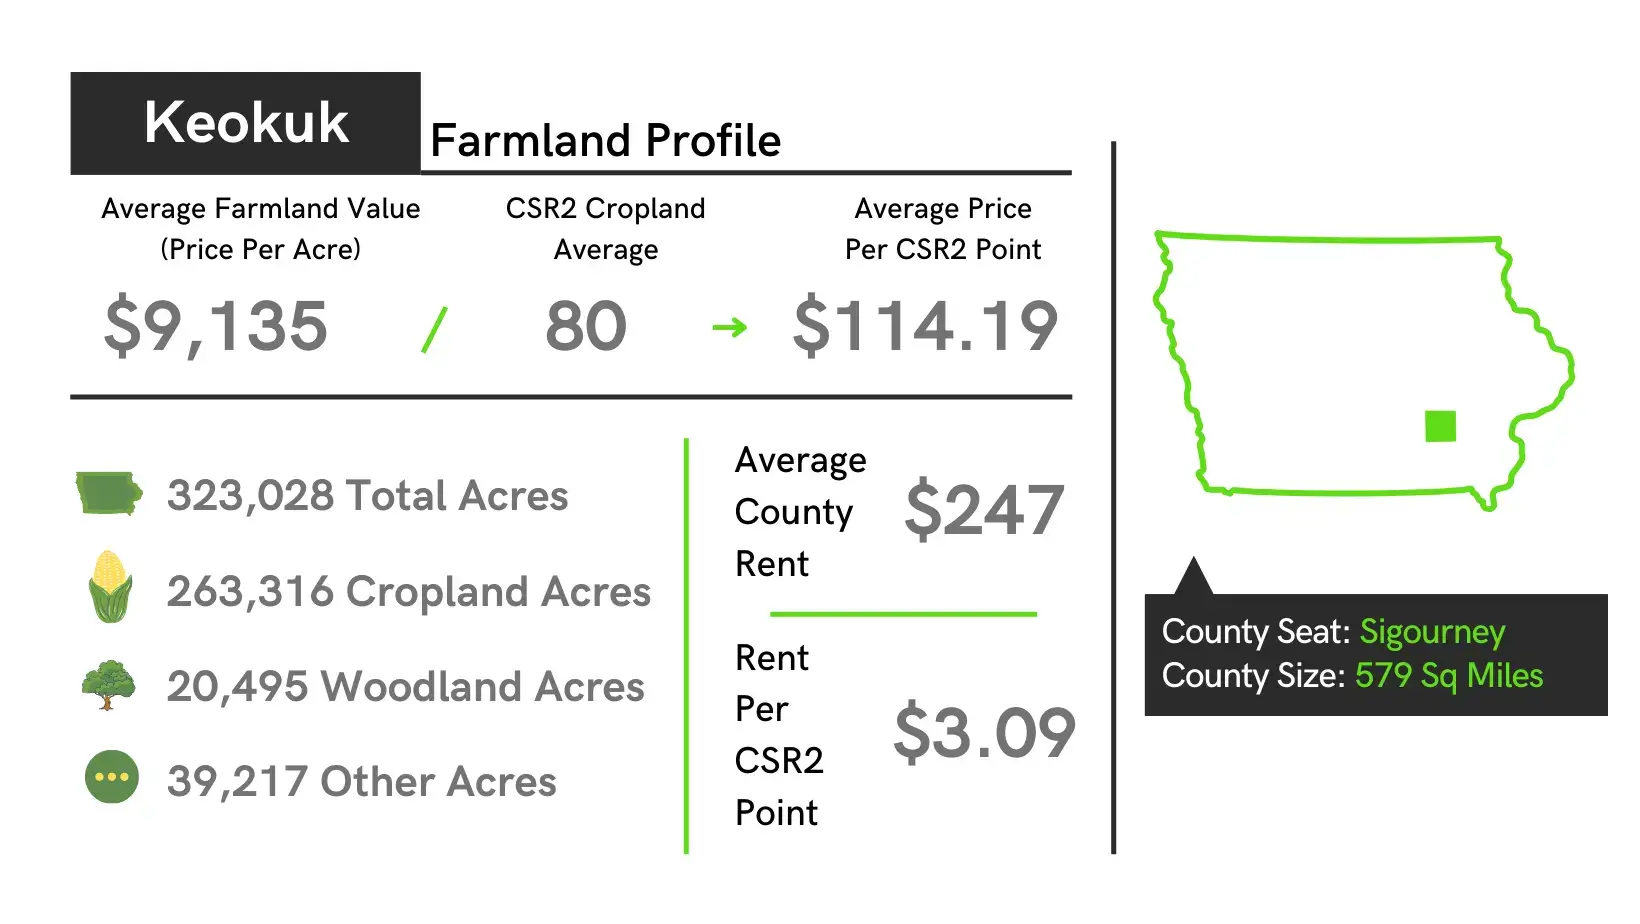 Keokuk County Farmland Profile